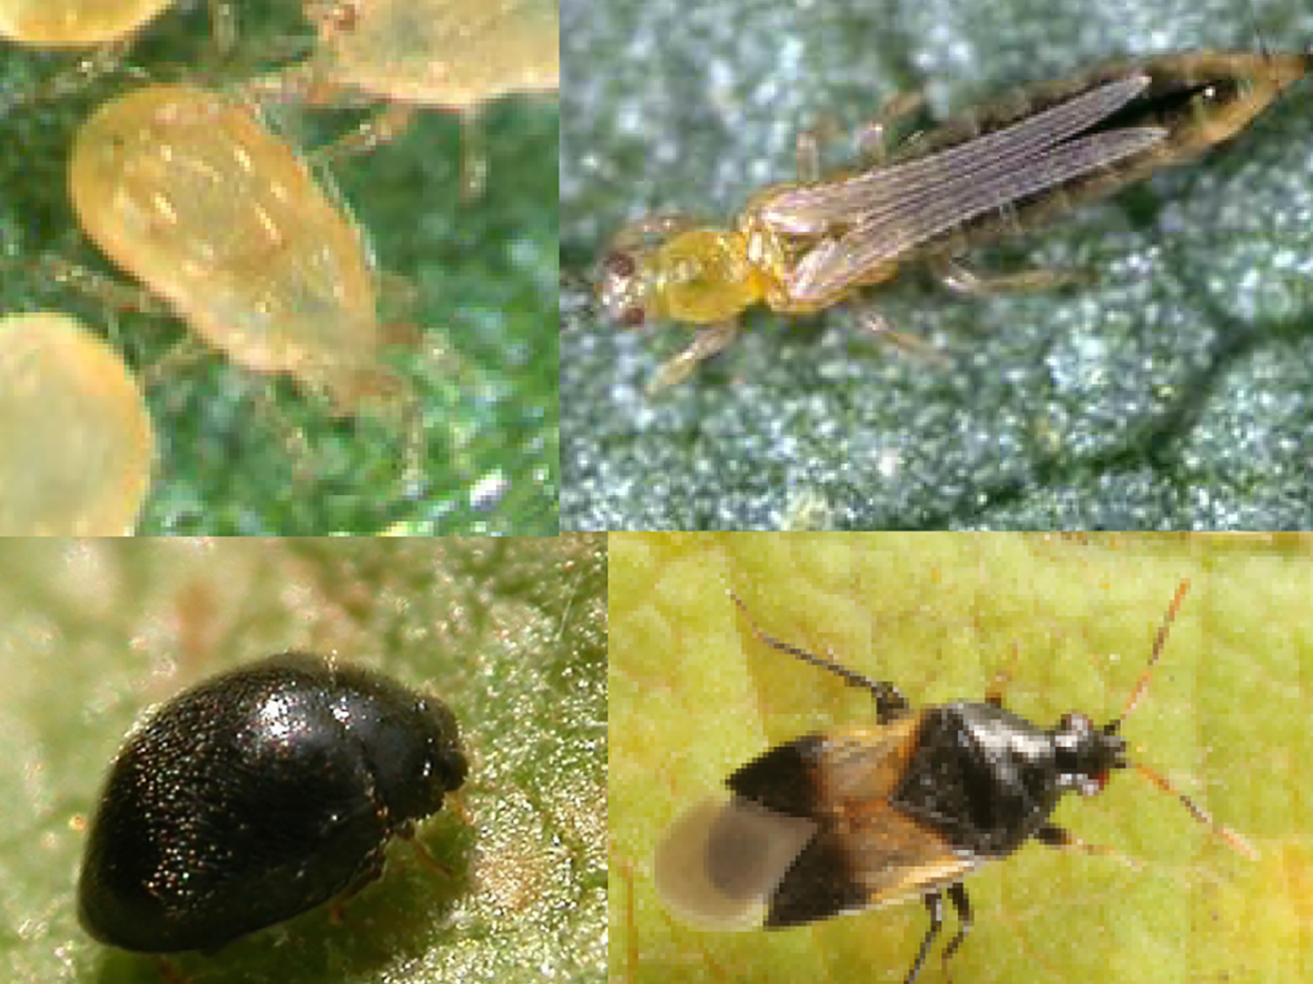 Common spider mite predators (clockwise from top left): a) western predatory mite2, b) western flower thrips3, c) minute pirate bug4, and d) spider mite destoryer ladybeetle5.